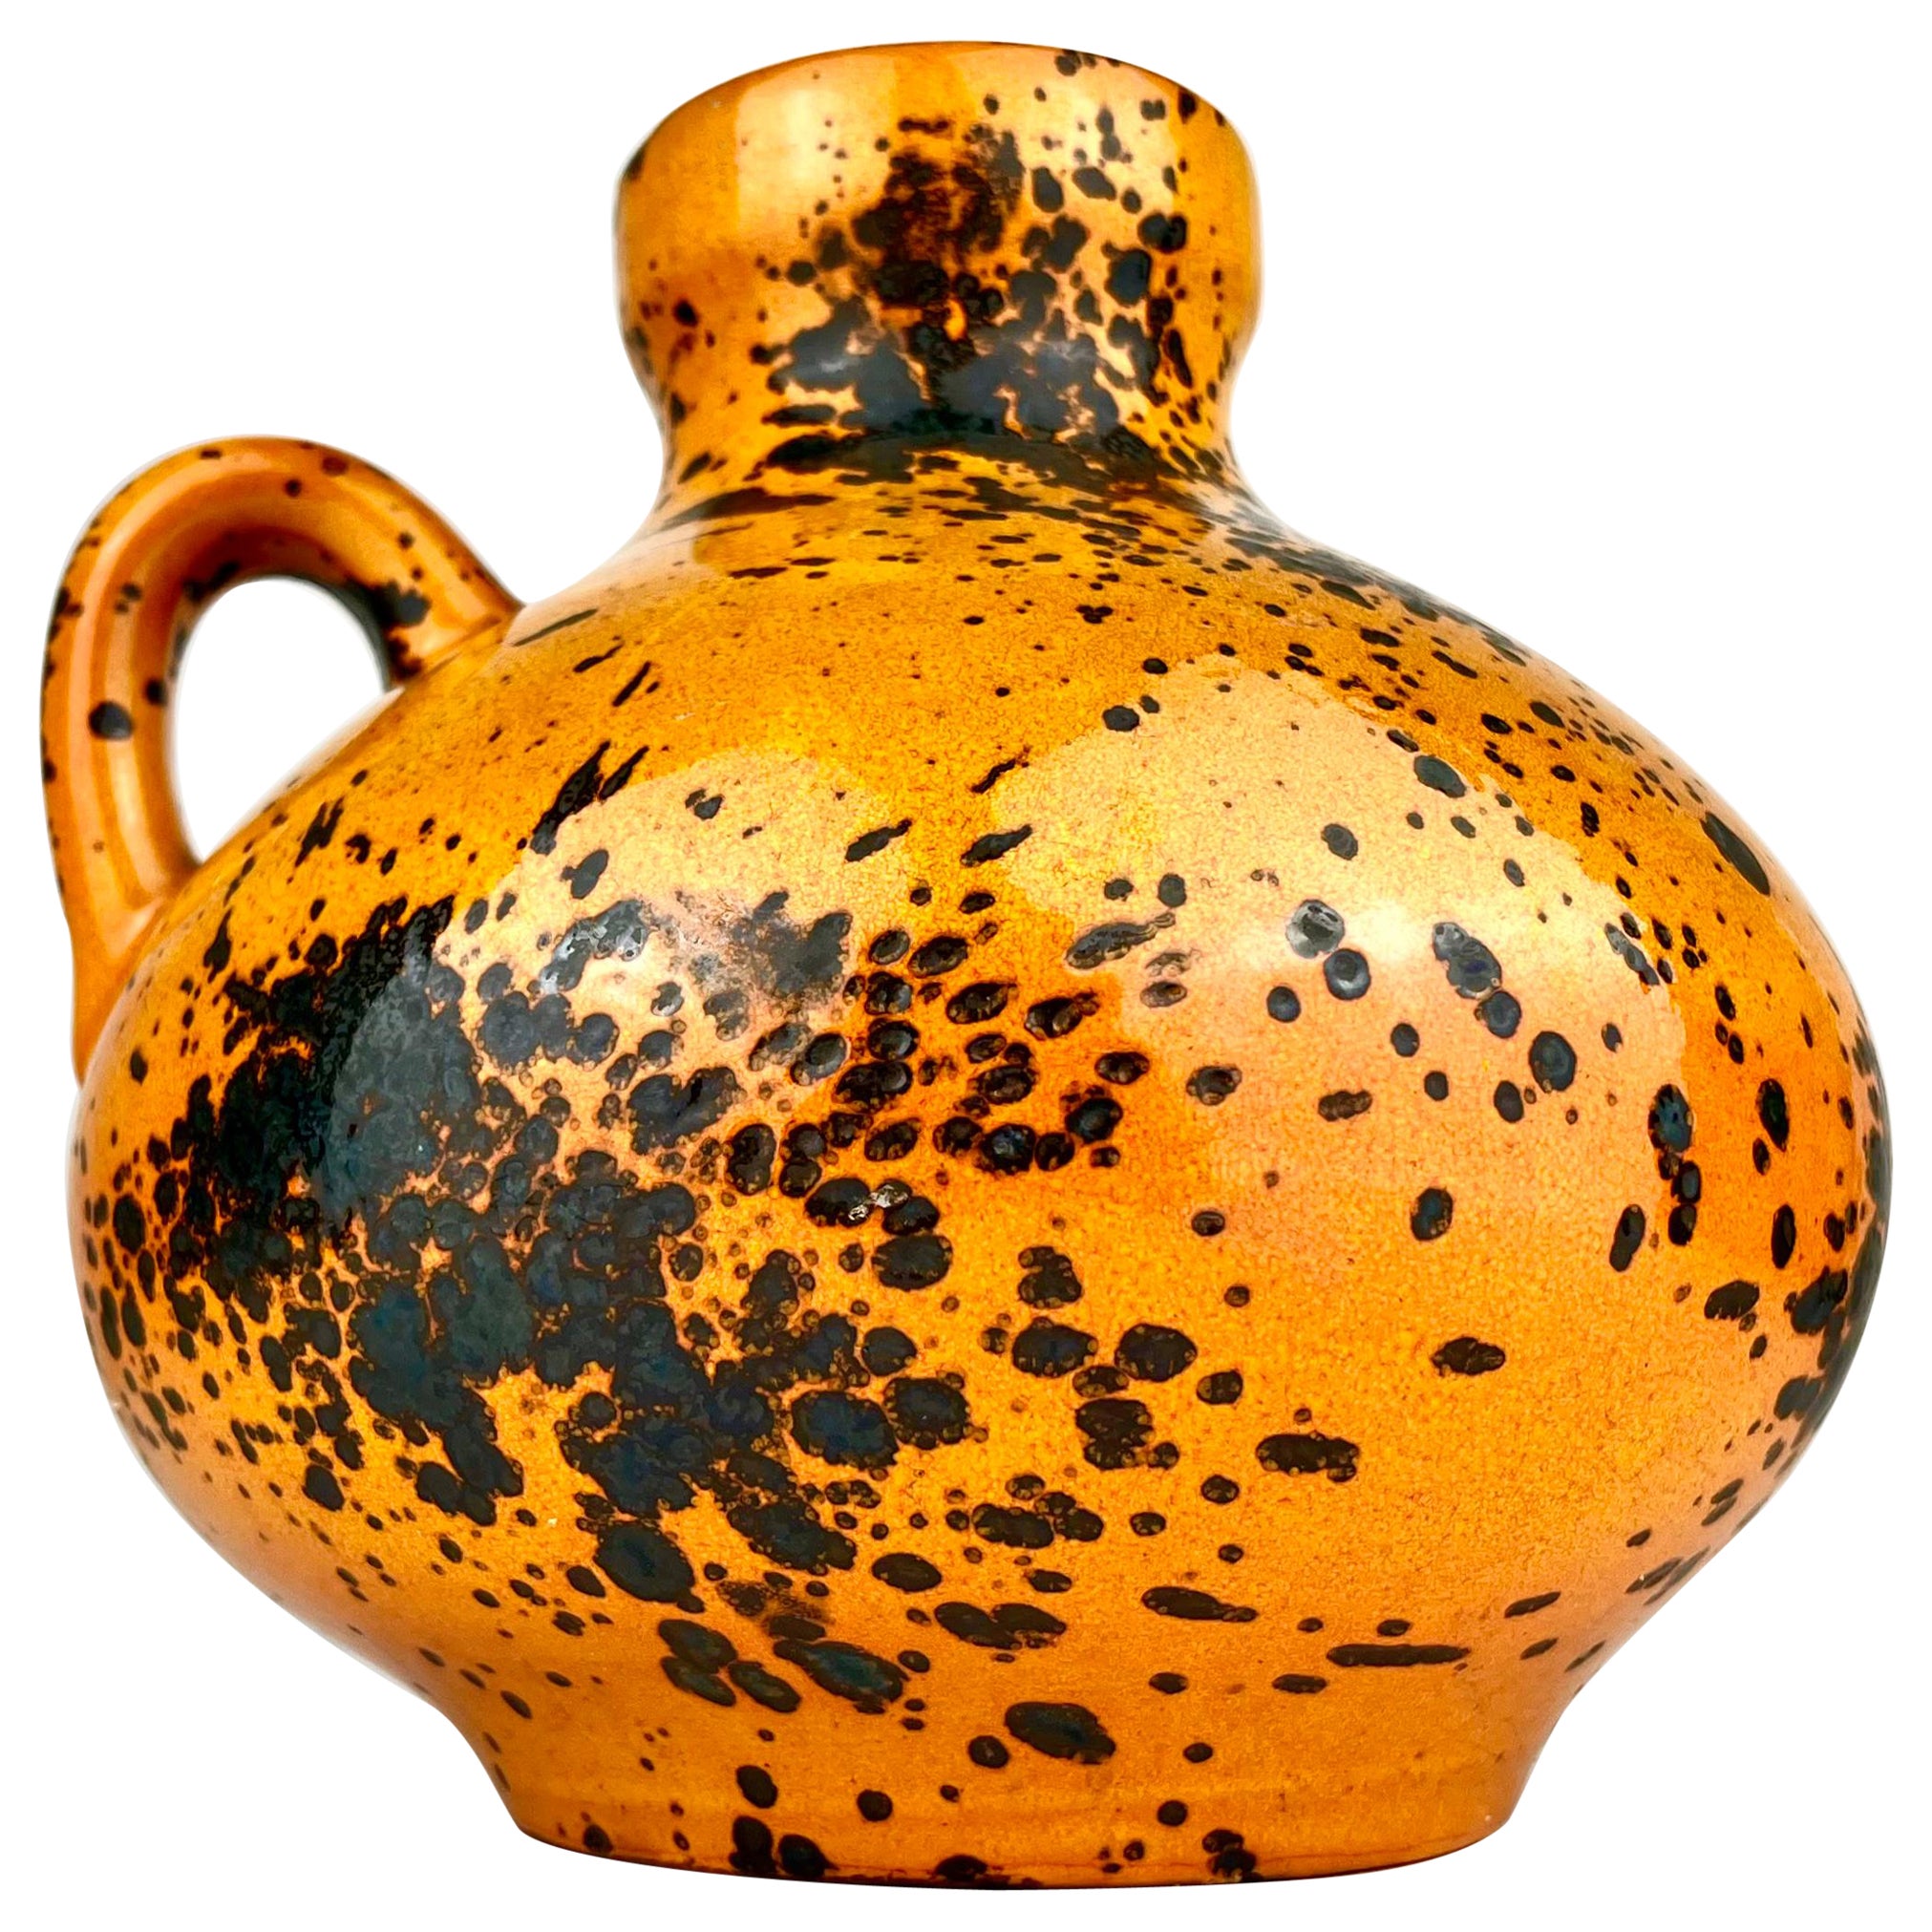 Marei Keramik 4302 West German Vase Jug 1960s Yellow West German Pottery WGC For Sale